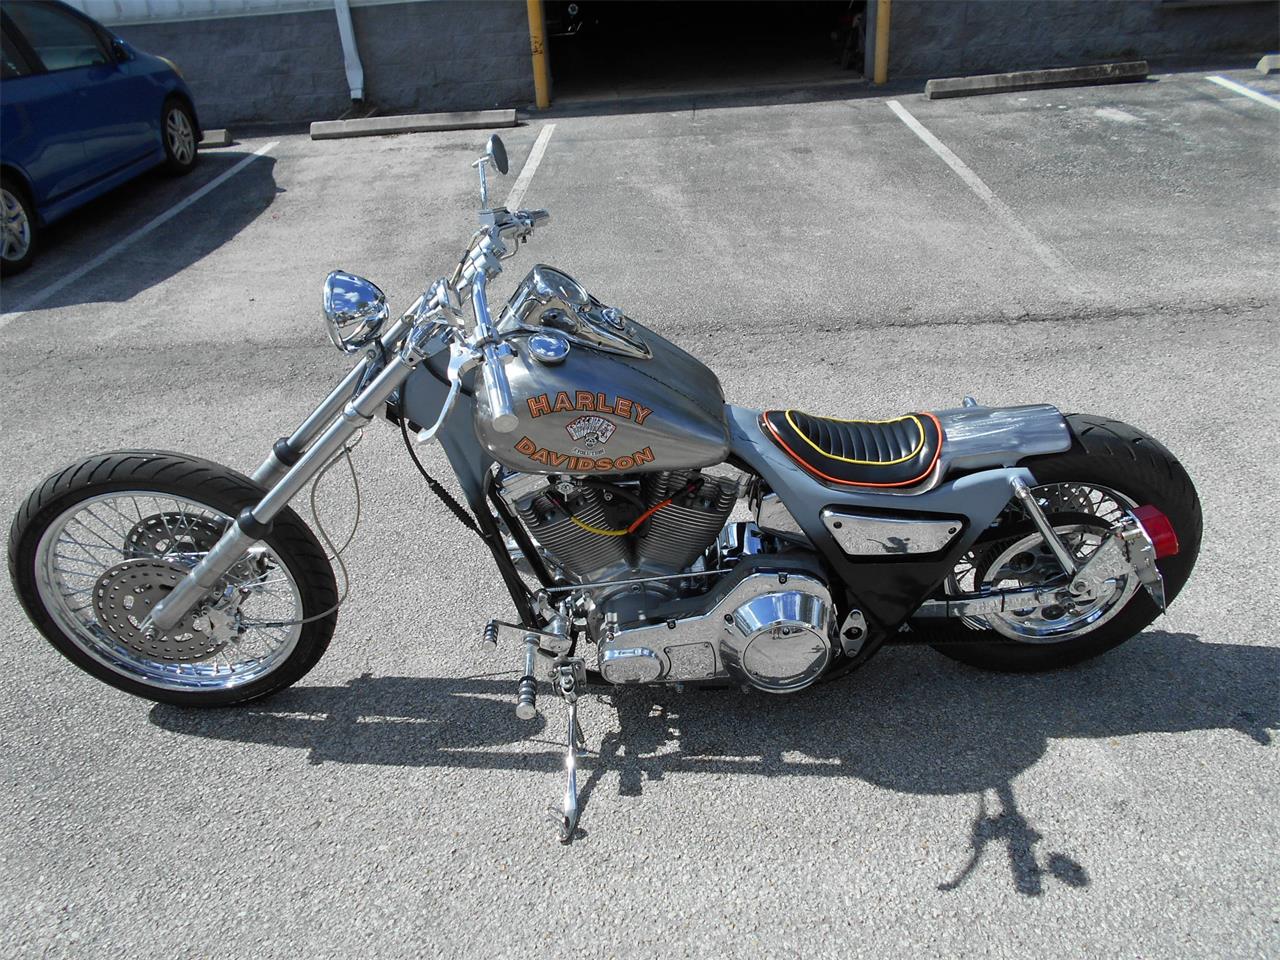 Harley Davidson And The Marlboro Man Motorcycle For Sale Off 66 Medpharmres Com